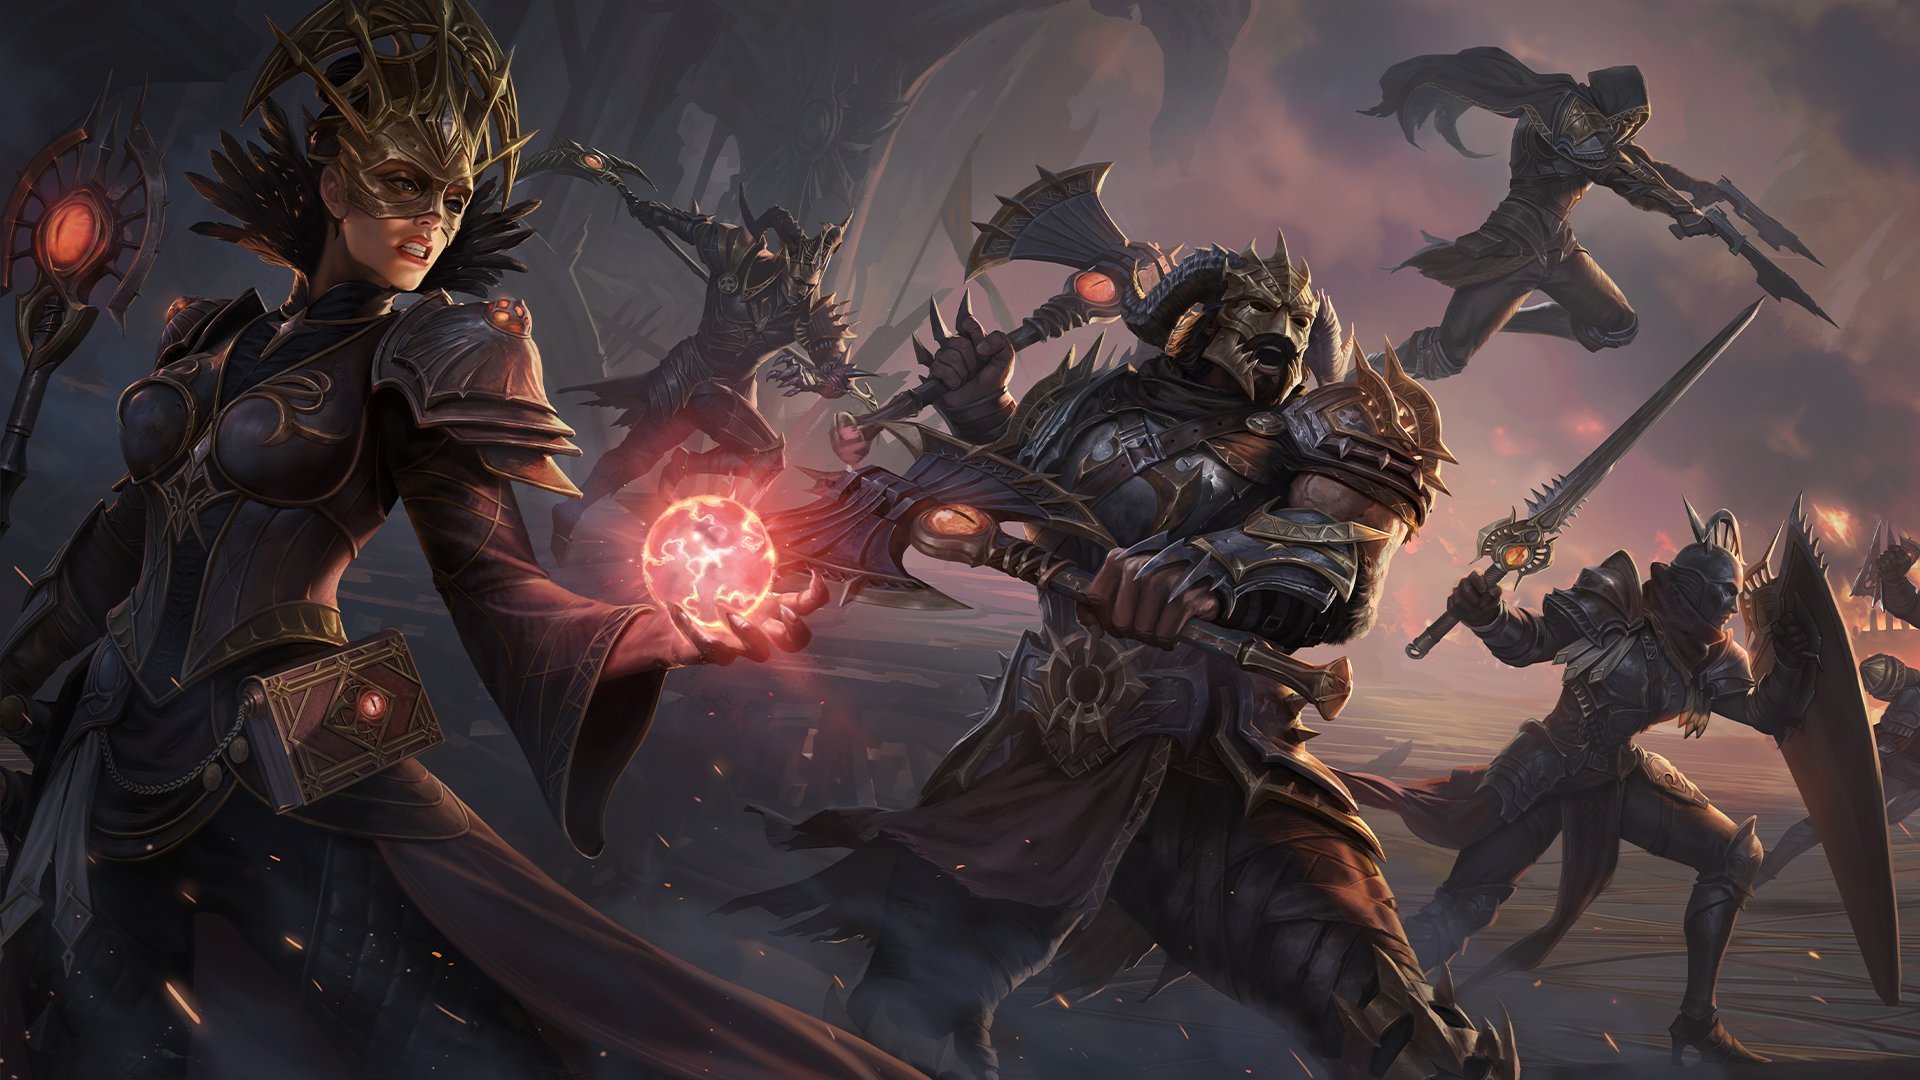 Diablo Immortal Battle Pass Season 2 rewards including rank 40 Empowered  rewards